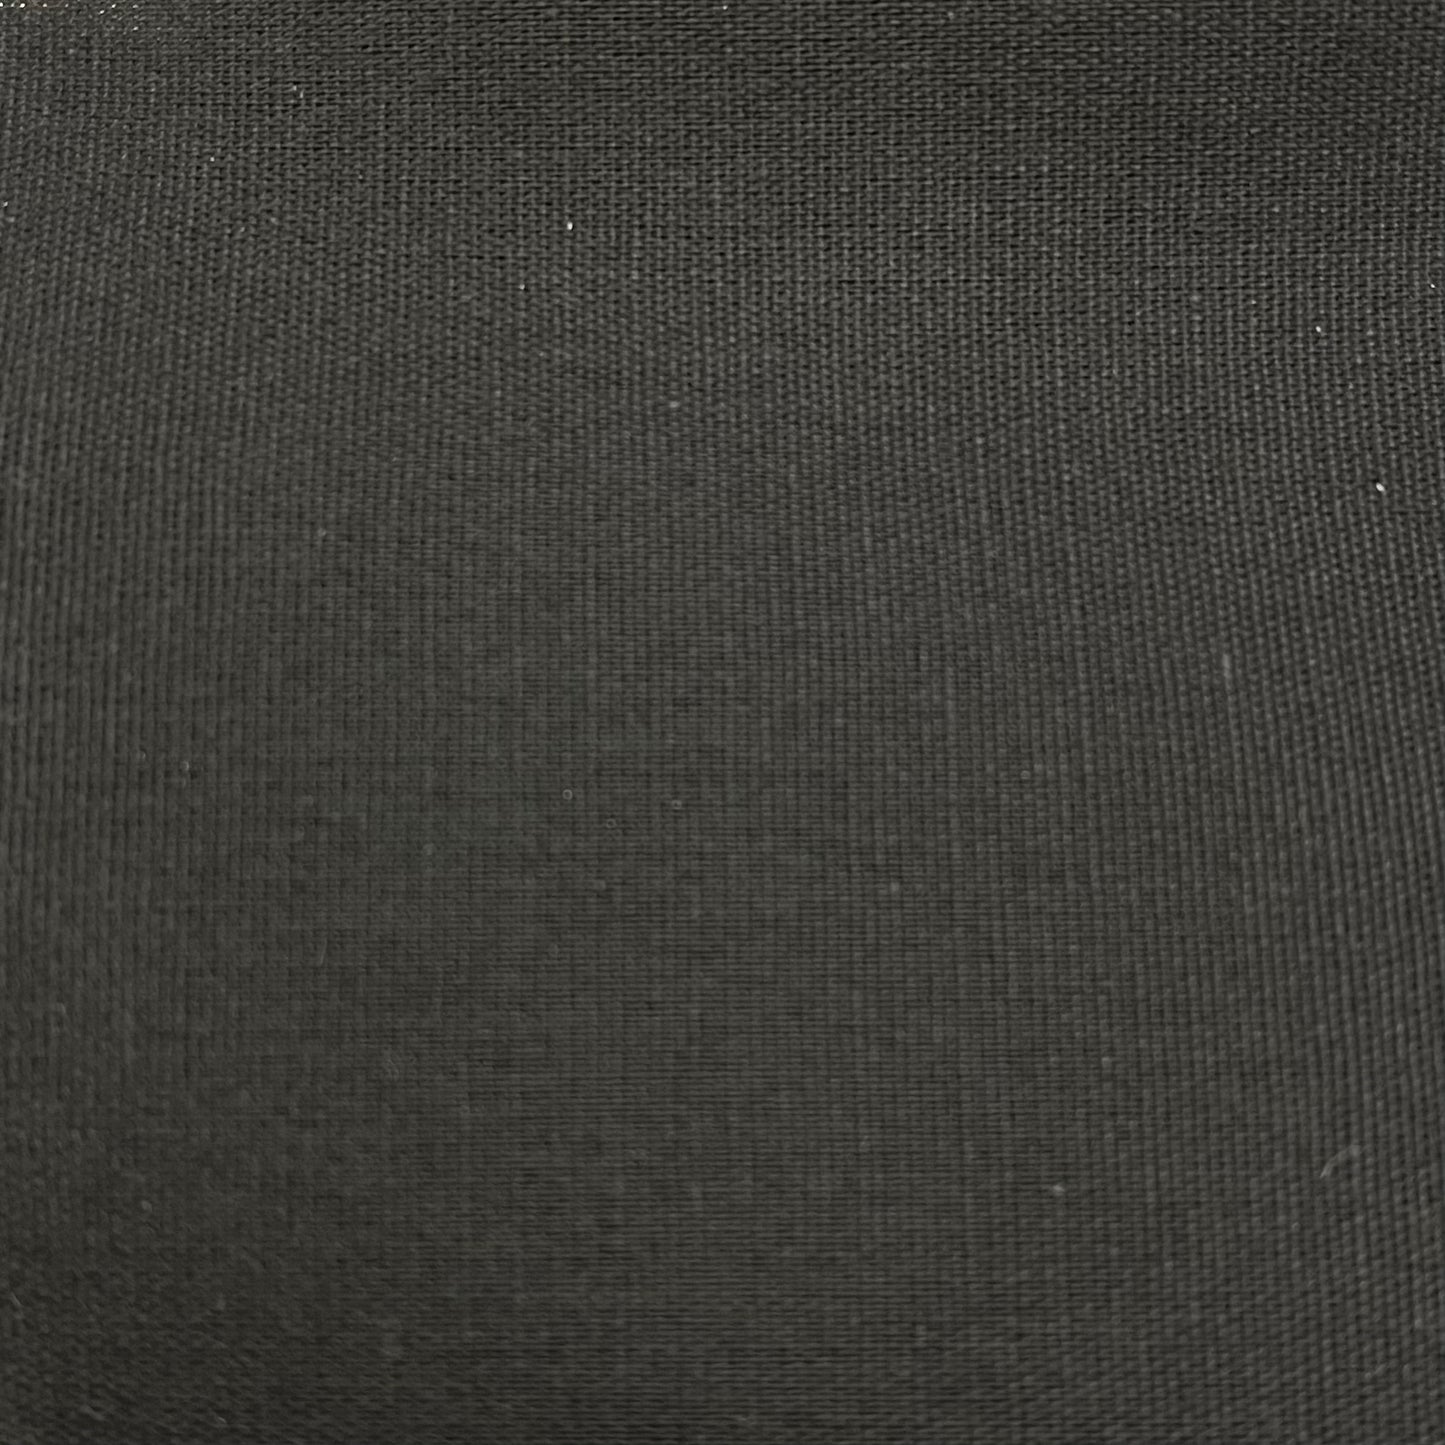 Popelín de poliéster/algodón - Negro (se vende por yarda)